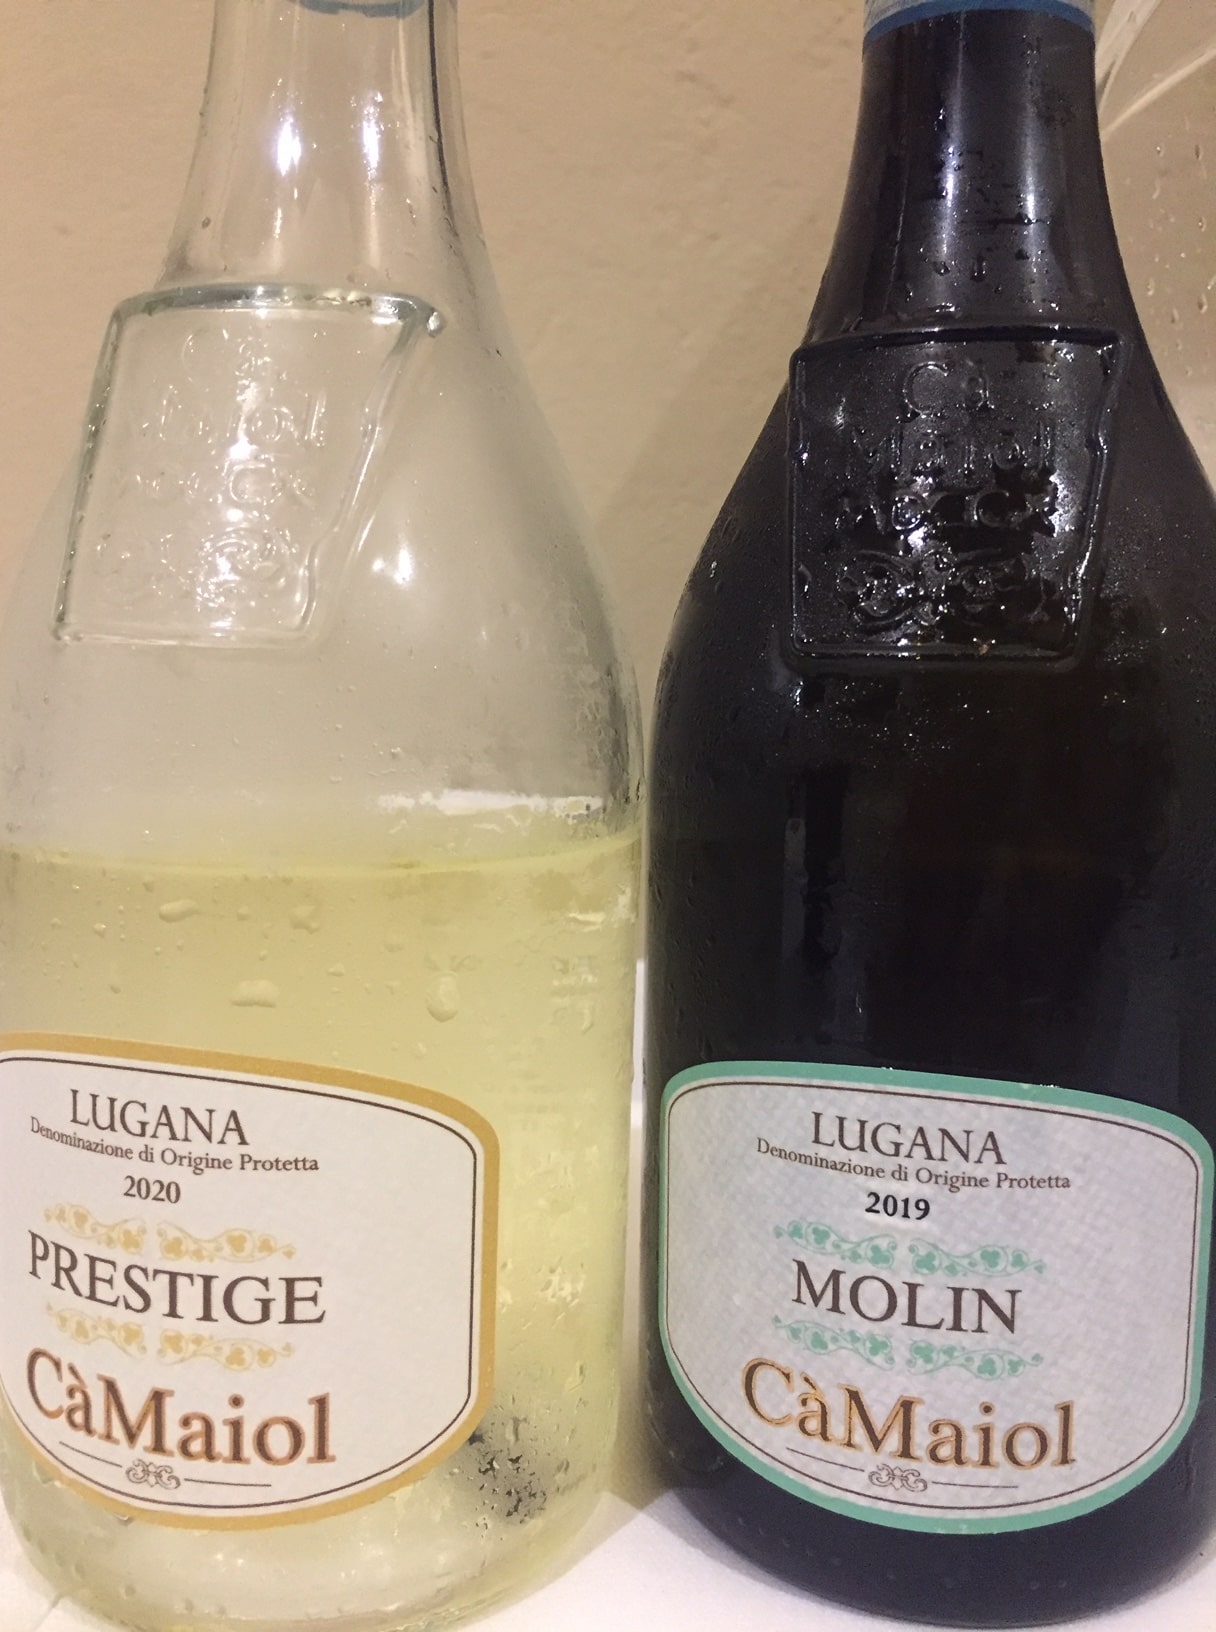 Bottiglie di Lugana, azienda Camaiol